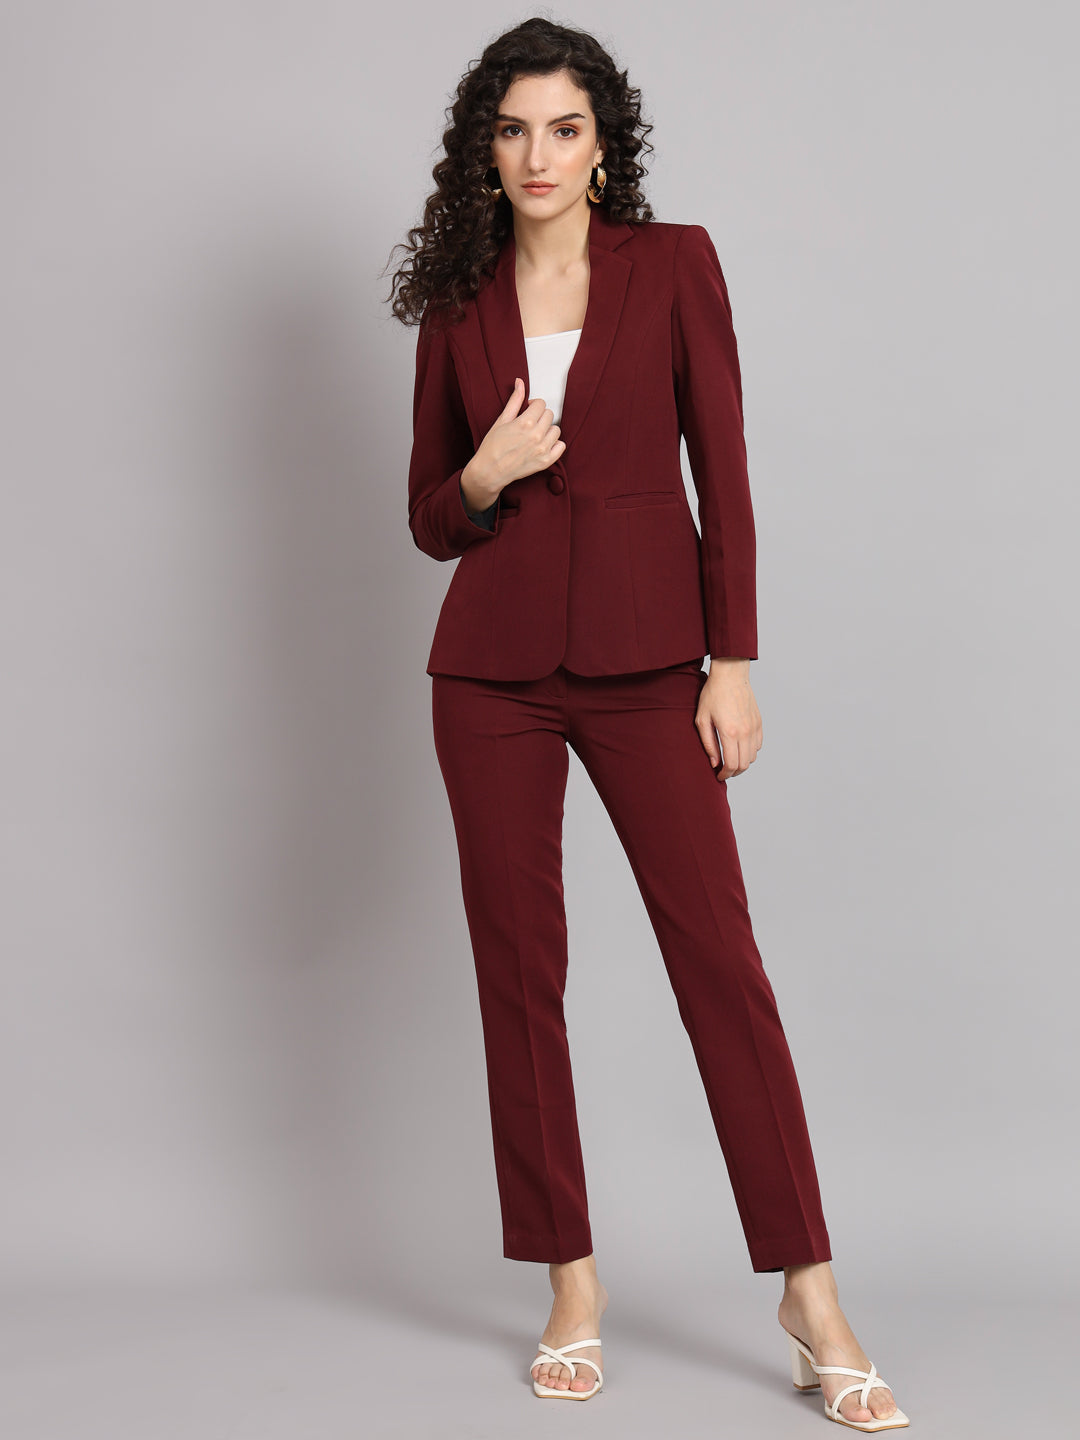 Women's 2-piece Burgundy Pants Suits, Ladies' Red Wine 2 Piece Pants and  Blazer Suit Set, Women's Coats, Formal Office Suits, Wedding Suits -   Canada